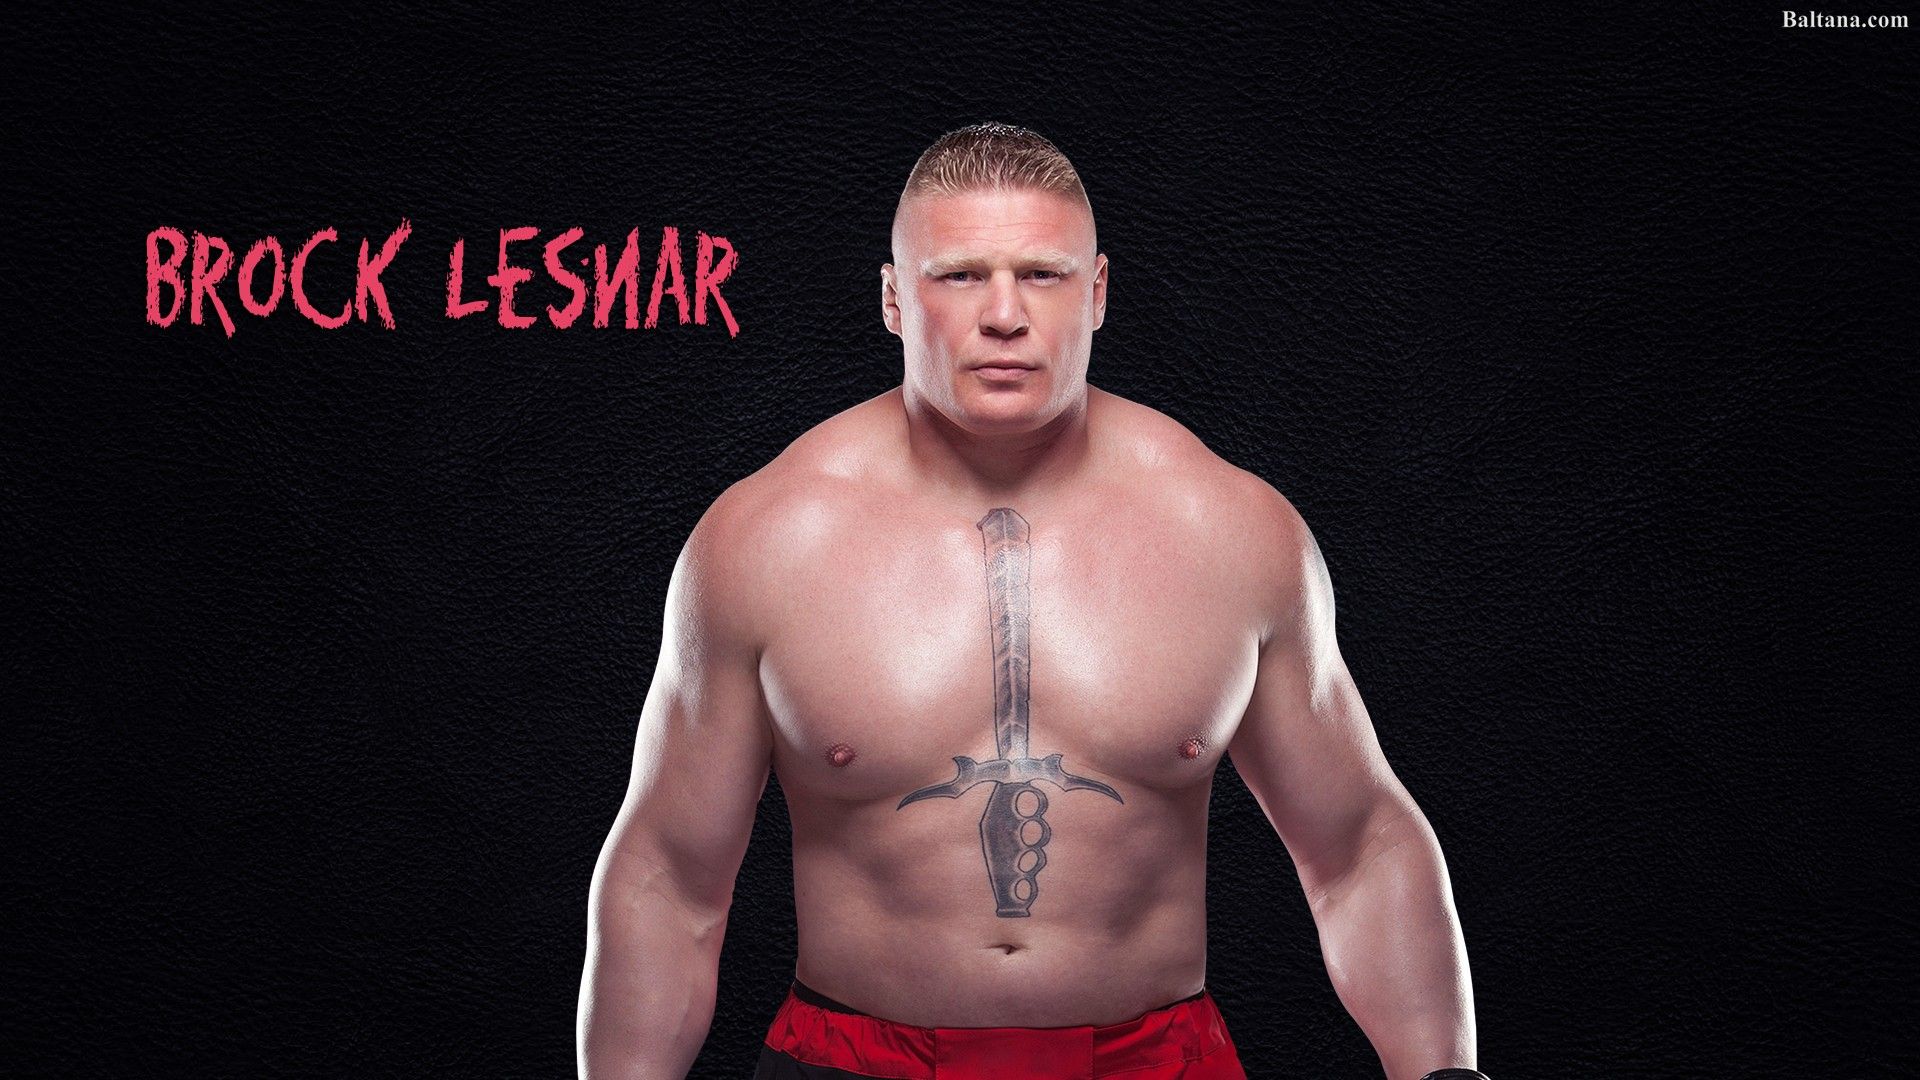 Brock Lesnar Wrestling WWE Men 1920x1080